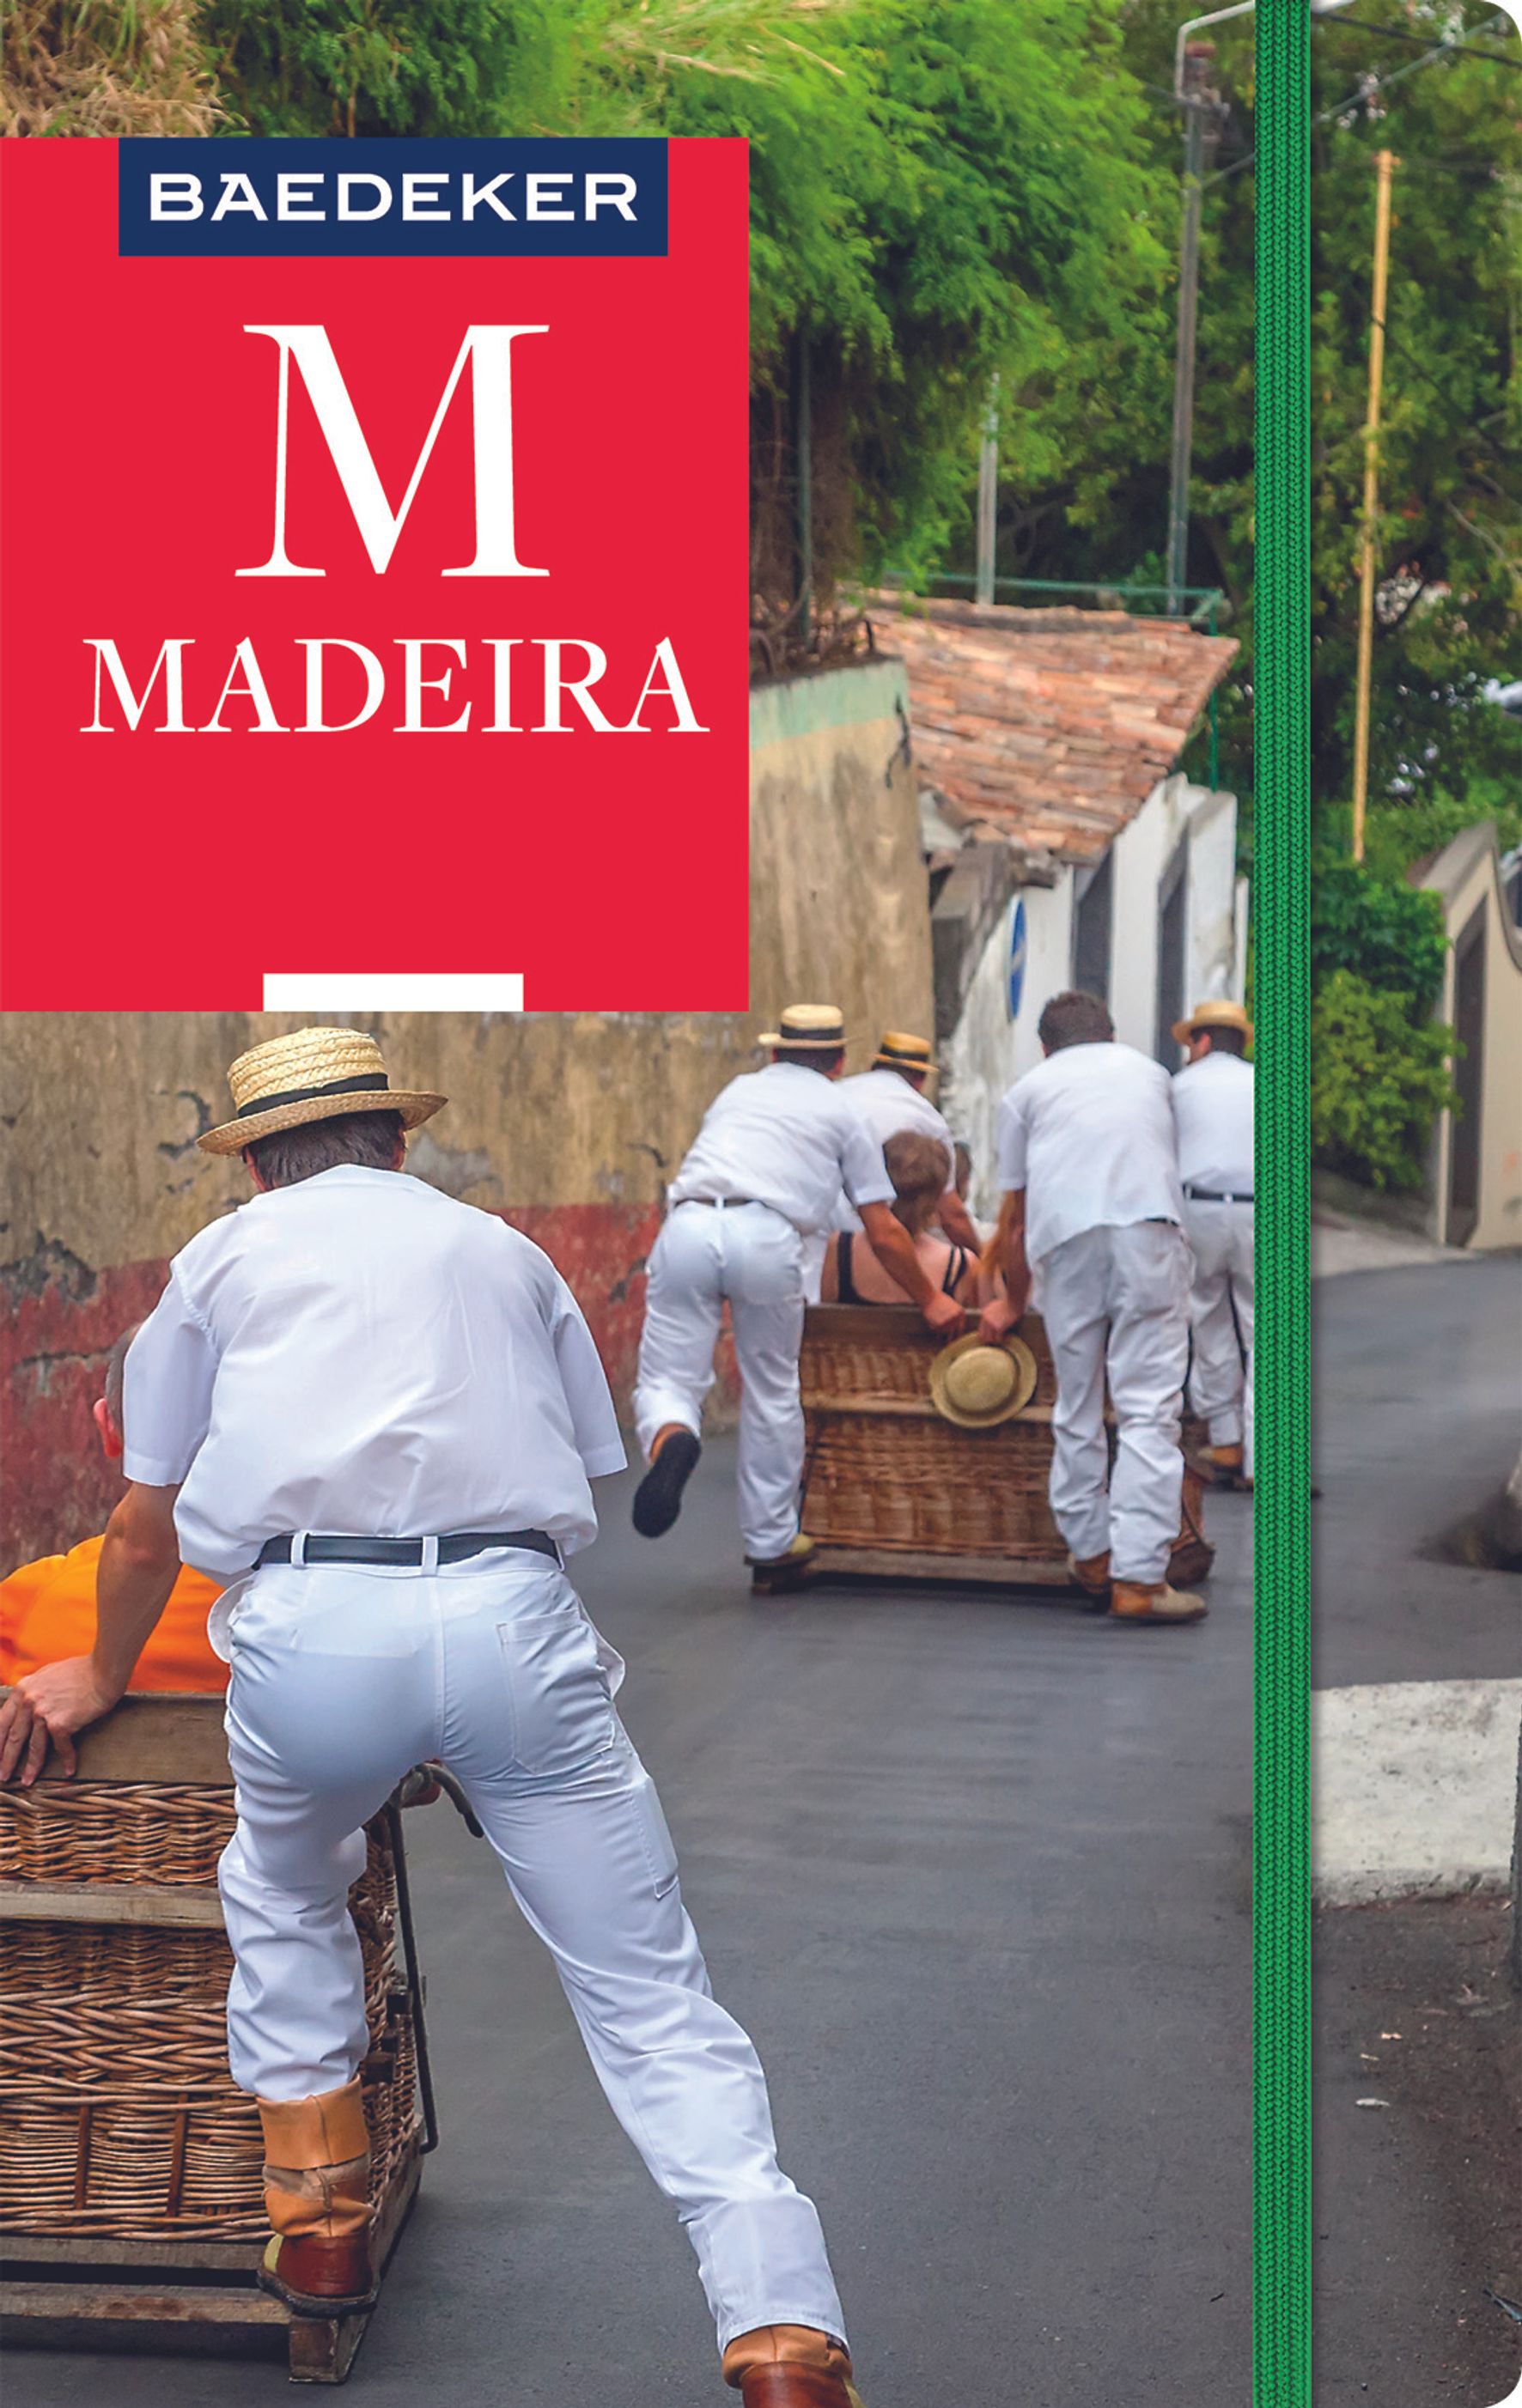 Baedeker Madeira (eBook)